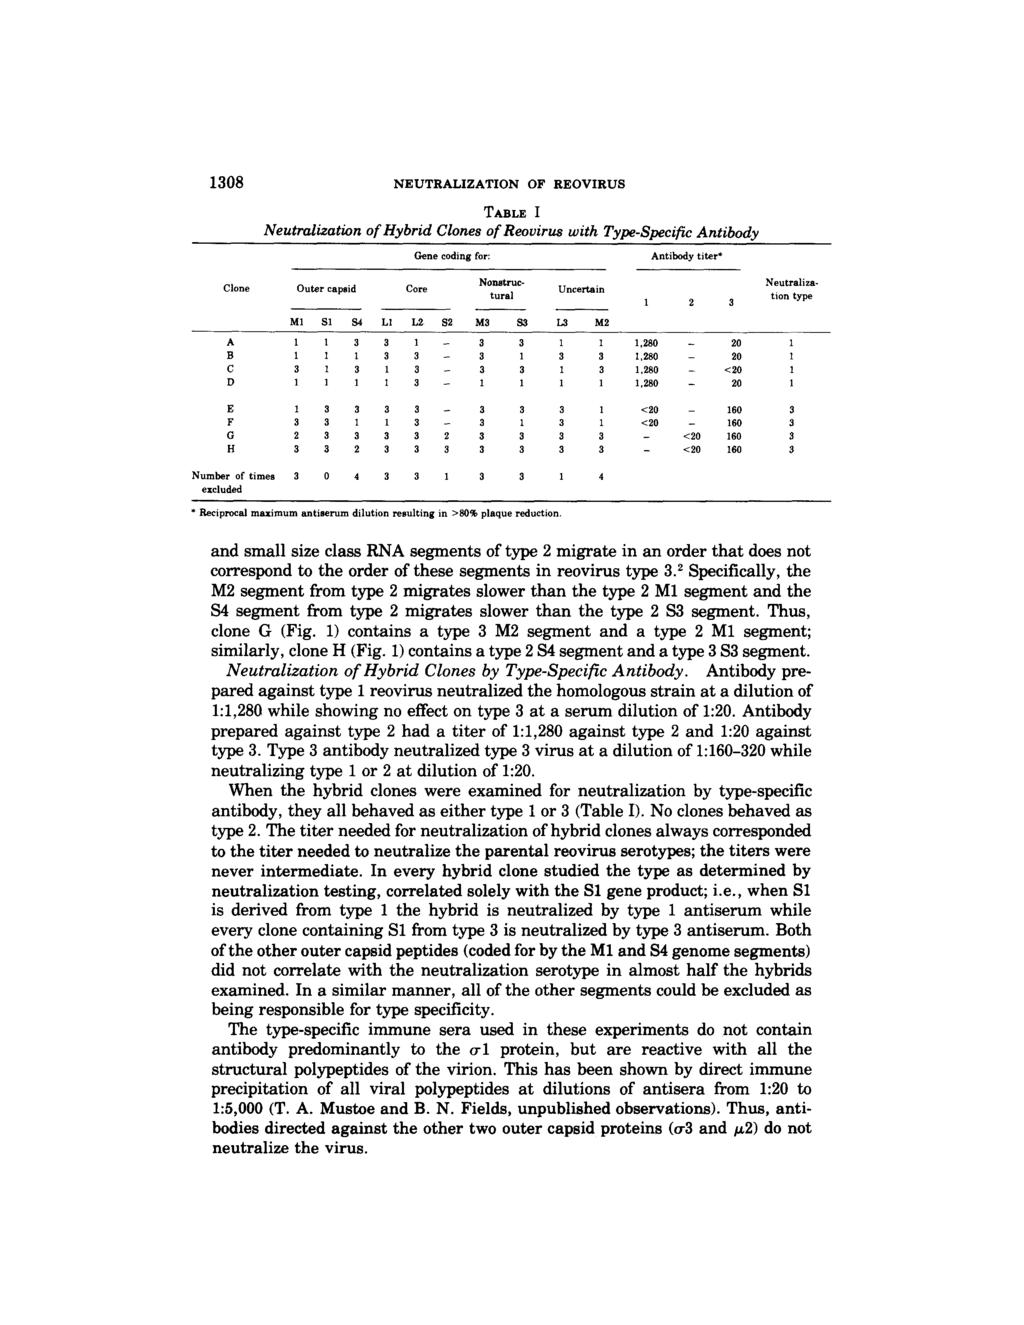 1308 NEUTRALIZATION OF REOVIRUS TABLE I Neutralization of Hybrid Clones of Reovirus with Type-Specific Antibody Gene coding for: Antibody titer* Nonstruc- Neutraliza- Clone Outer capsid Core